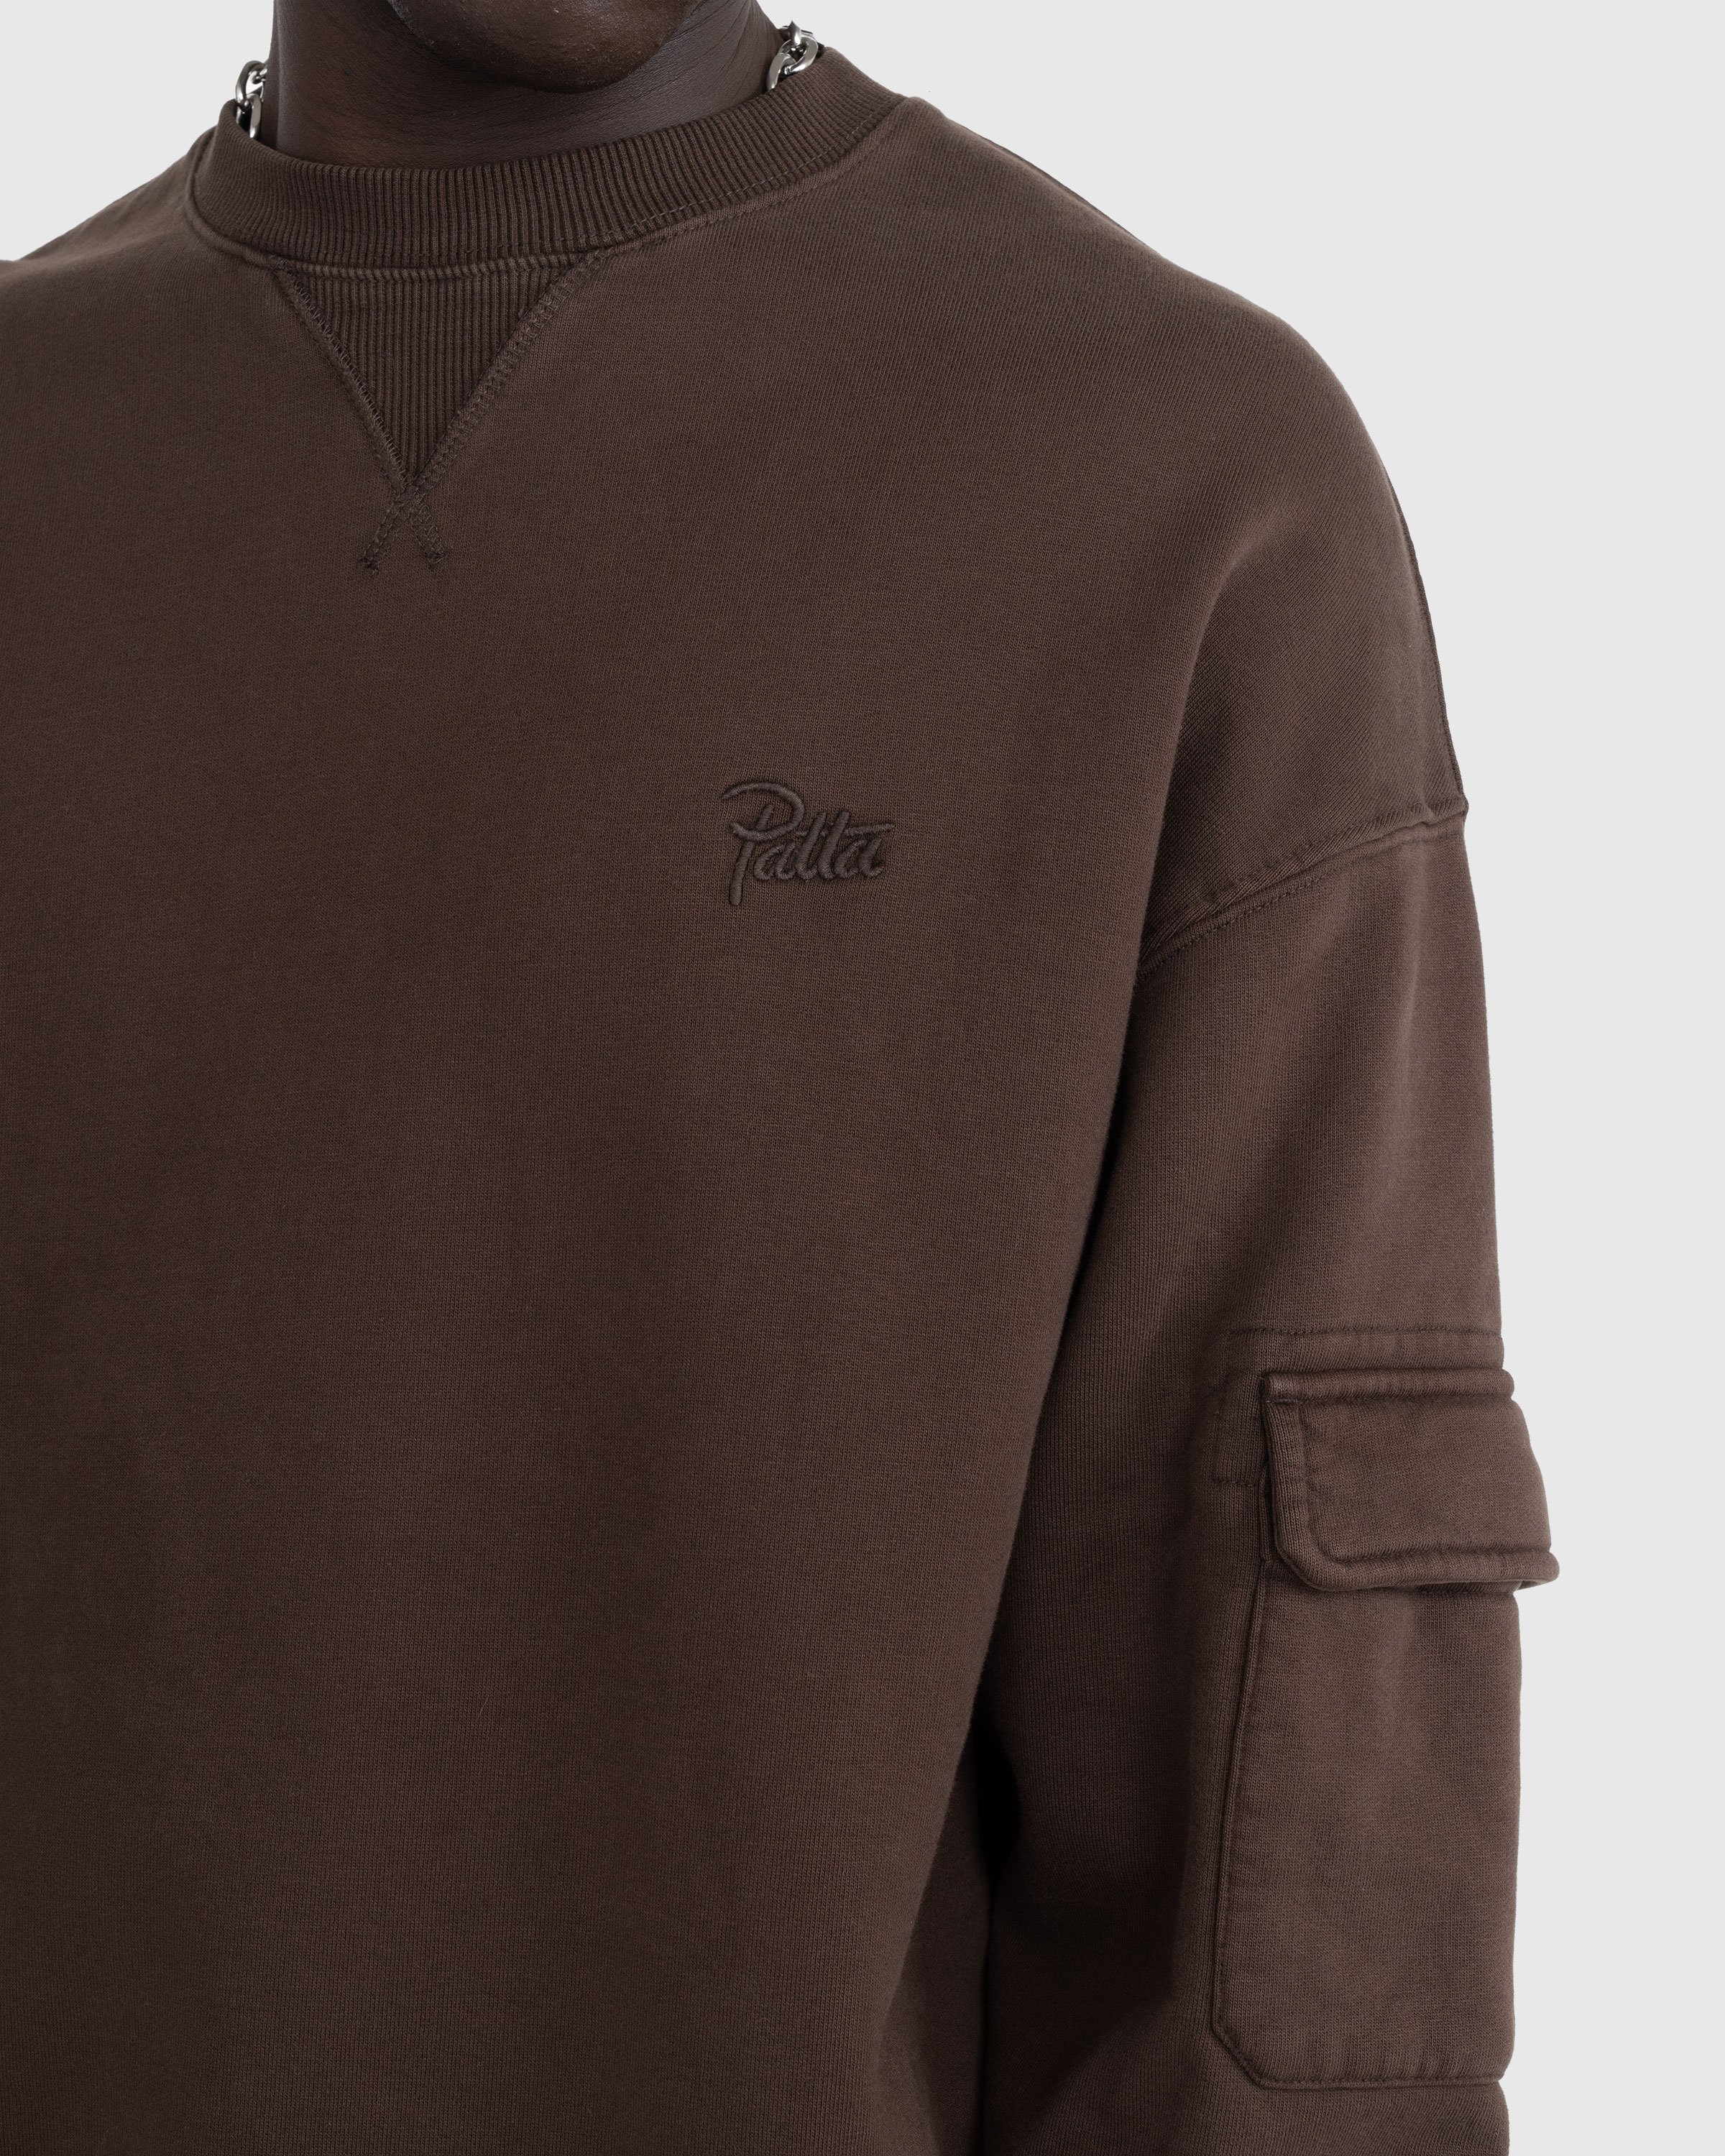 Patta - Basic Pigment Dye Pocket Crewneck Sweater Delicioso - Clothing - Brown - Image 5